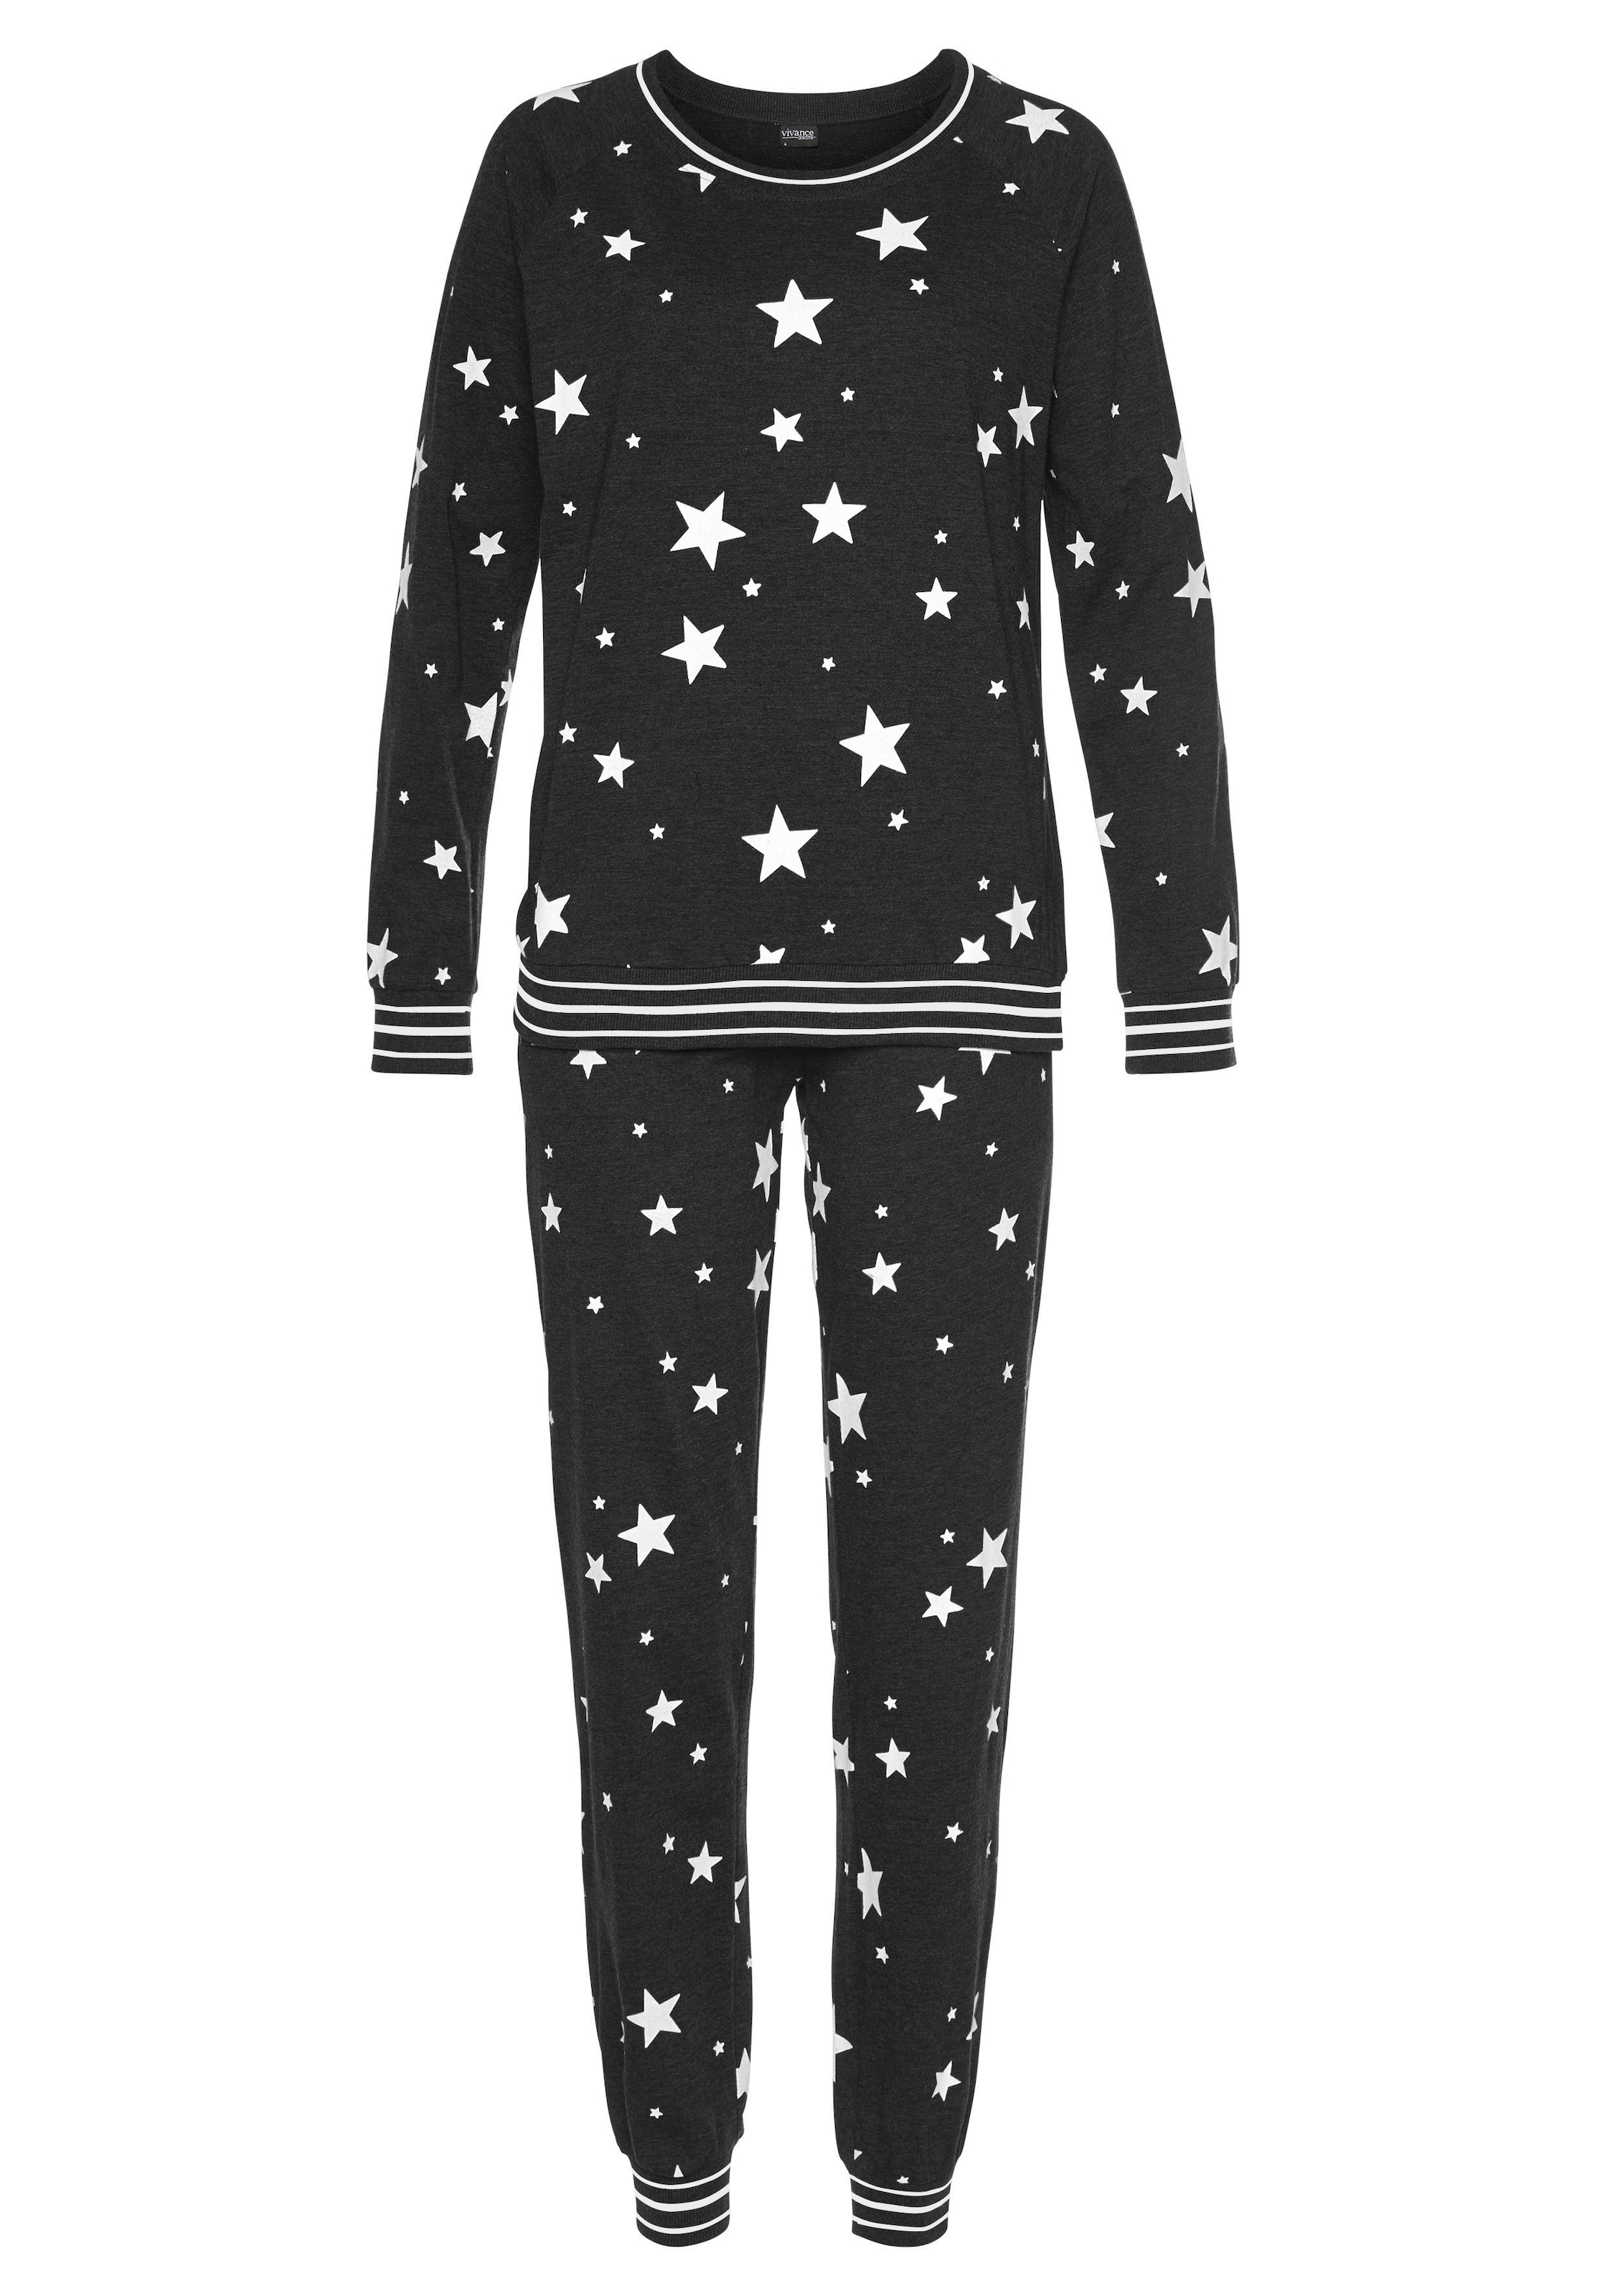 Vivance Dreams Pyjama, günstig Sternedruck mit kaufen